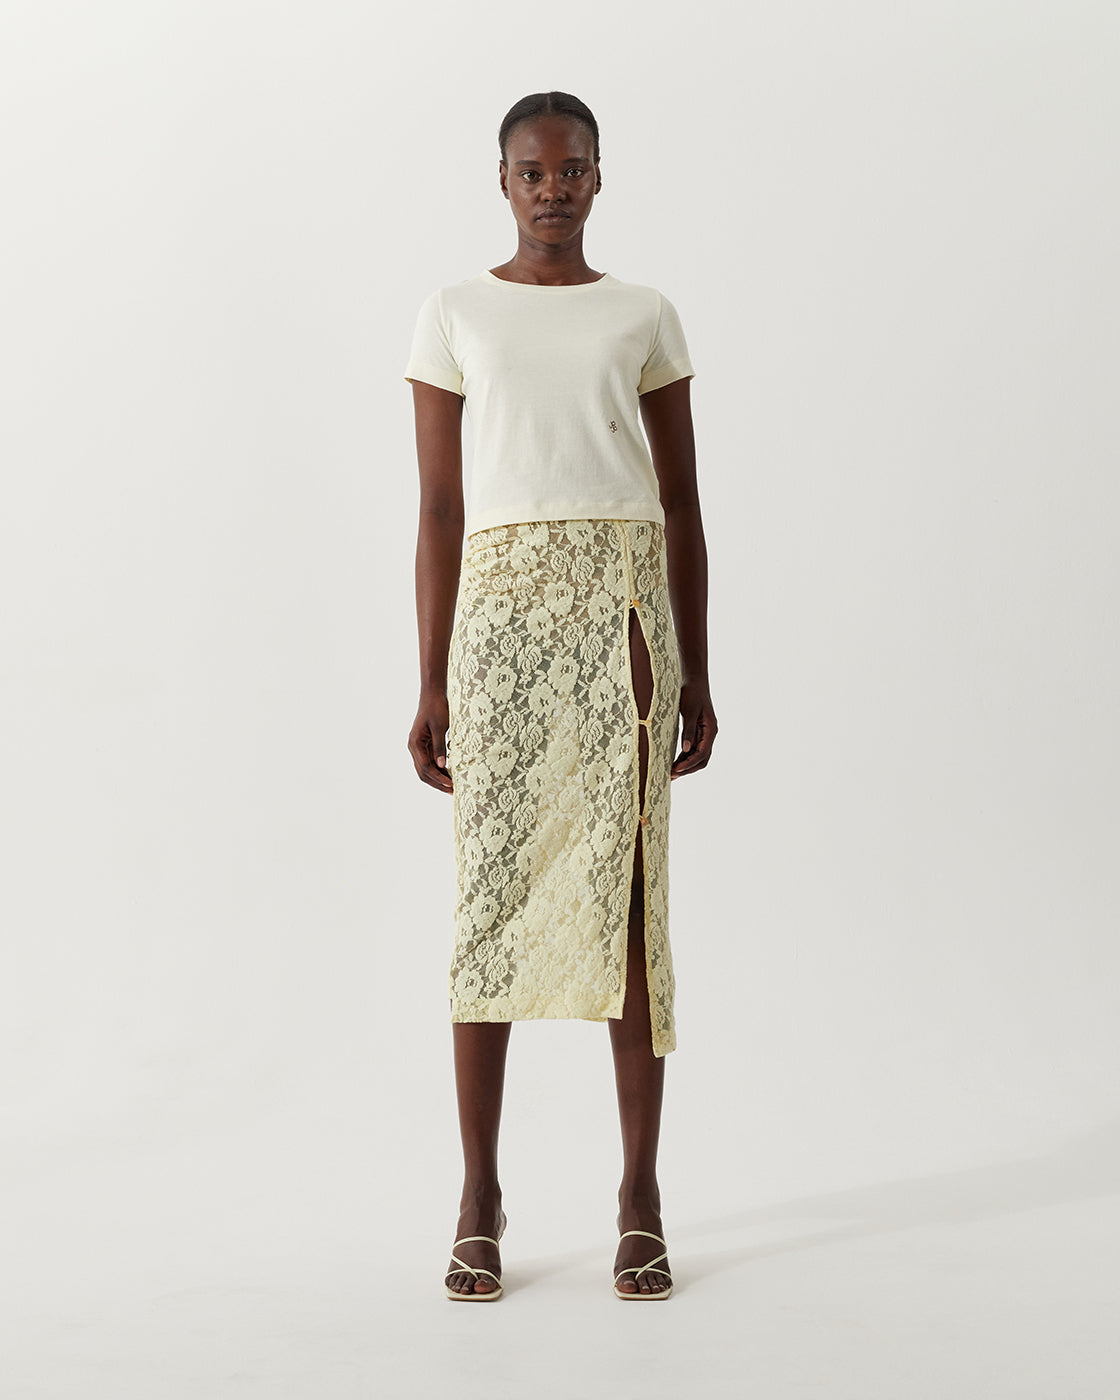 Mirren Skirt Cotton Blend Floral Lace Yellow